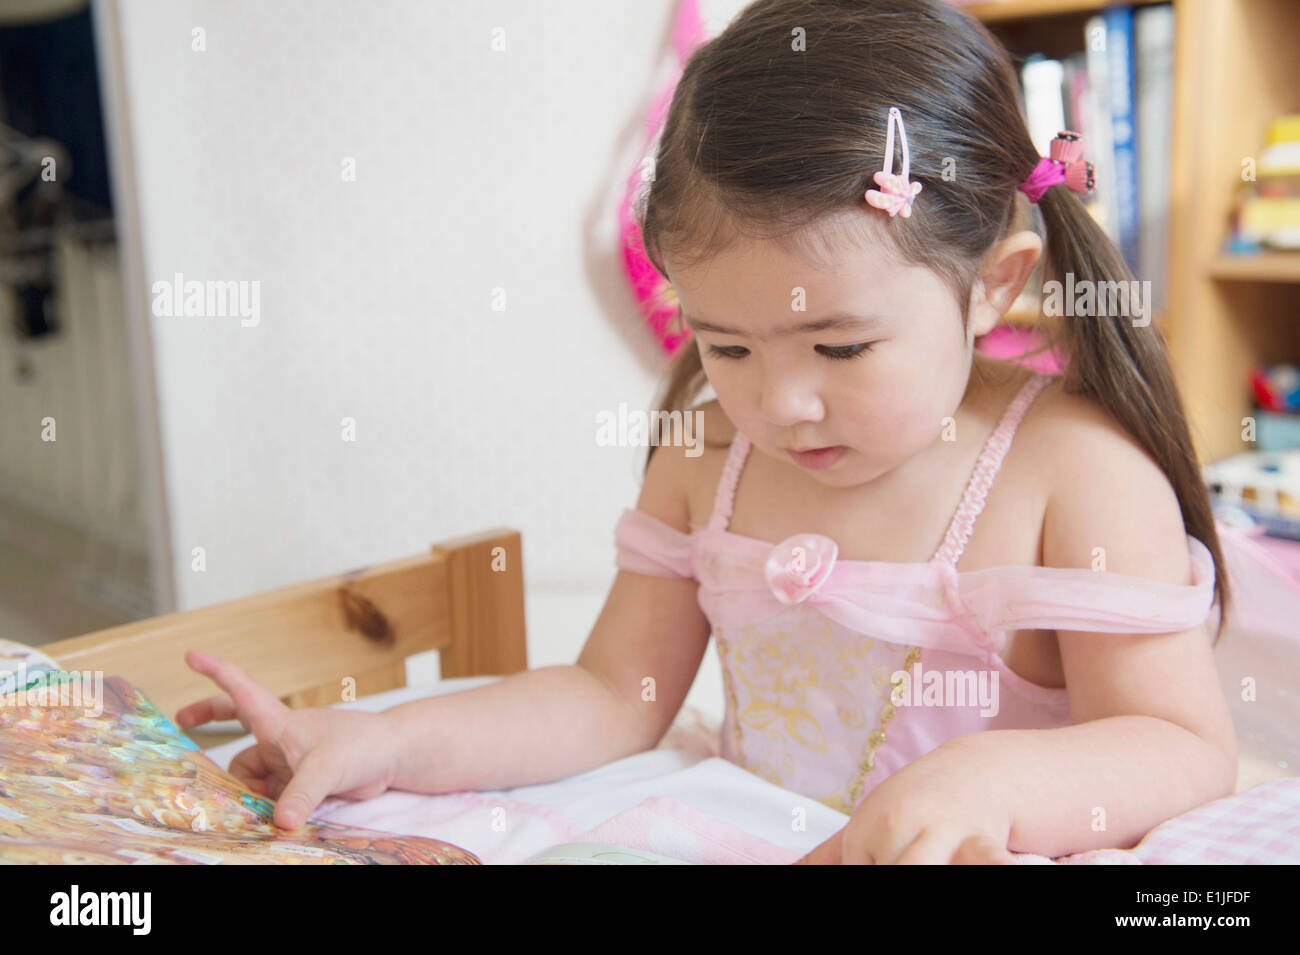 Girl in princess costume Stock Photo